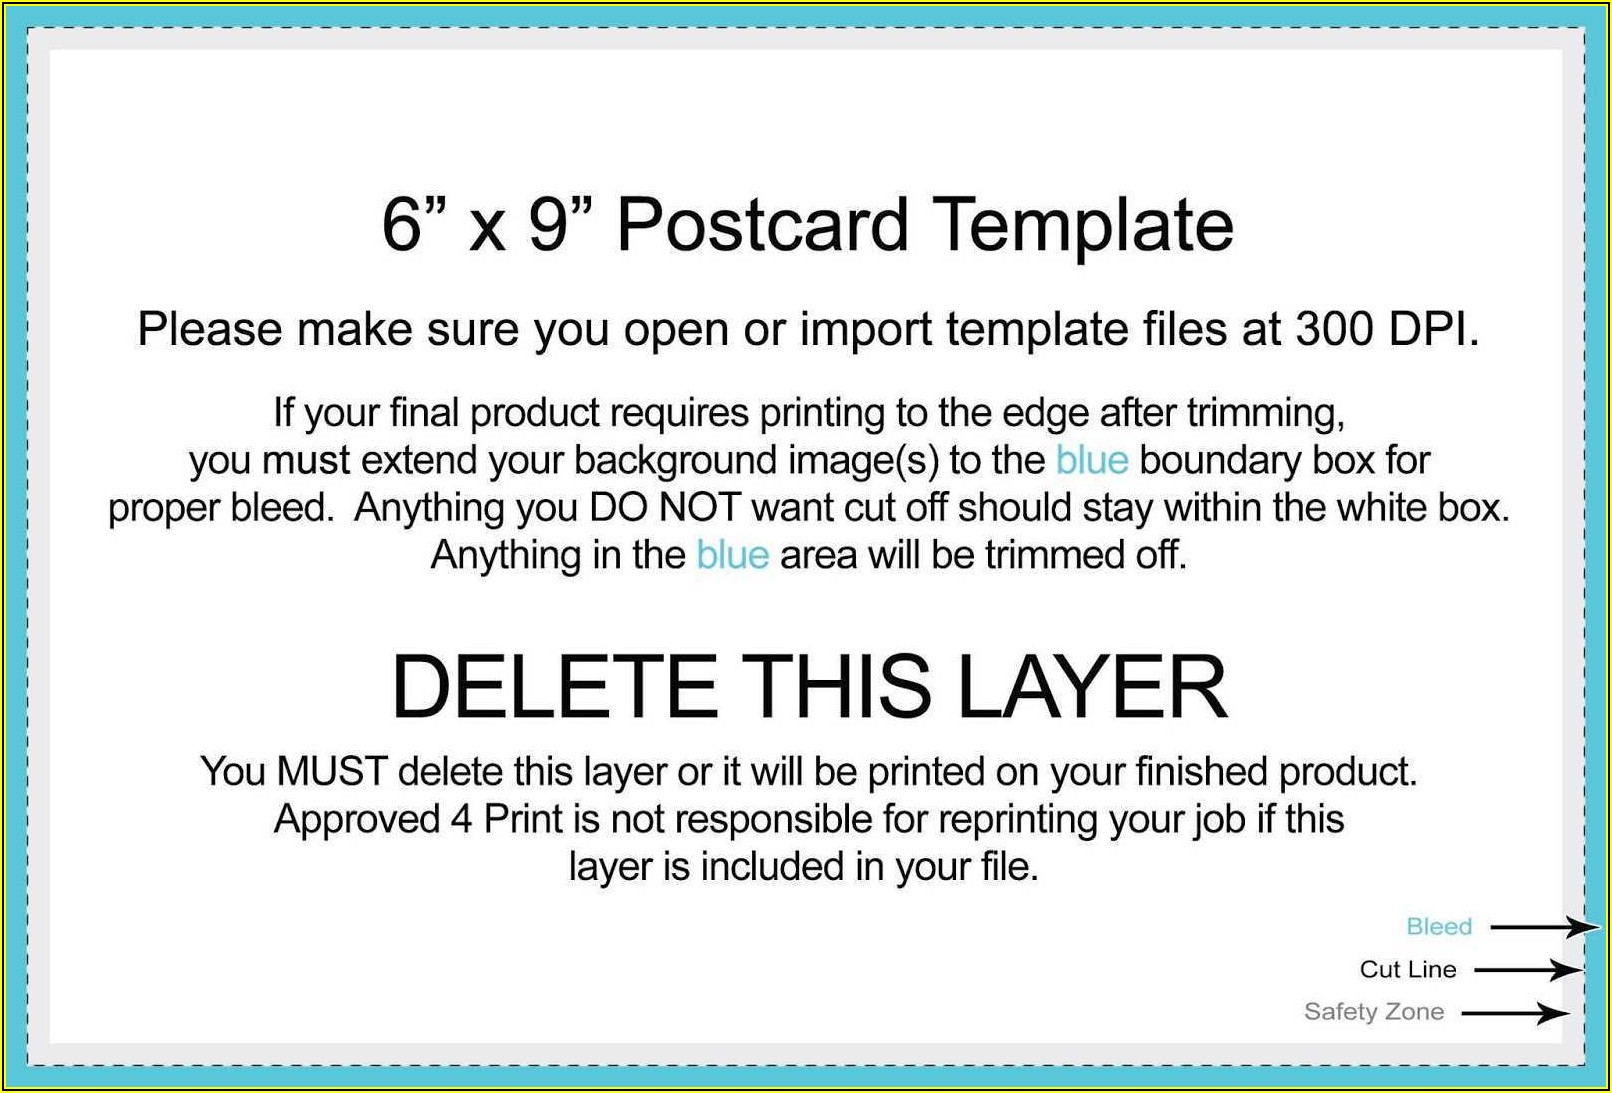 9x6 Postcard Template Usps